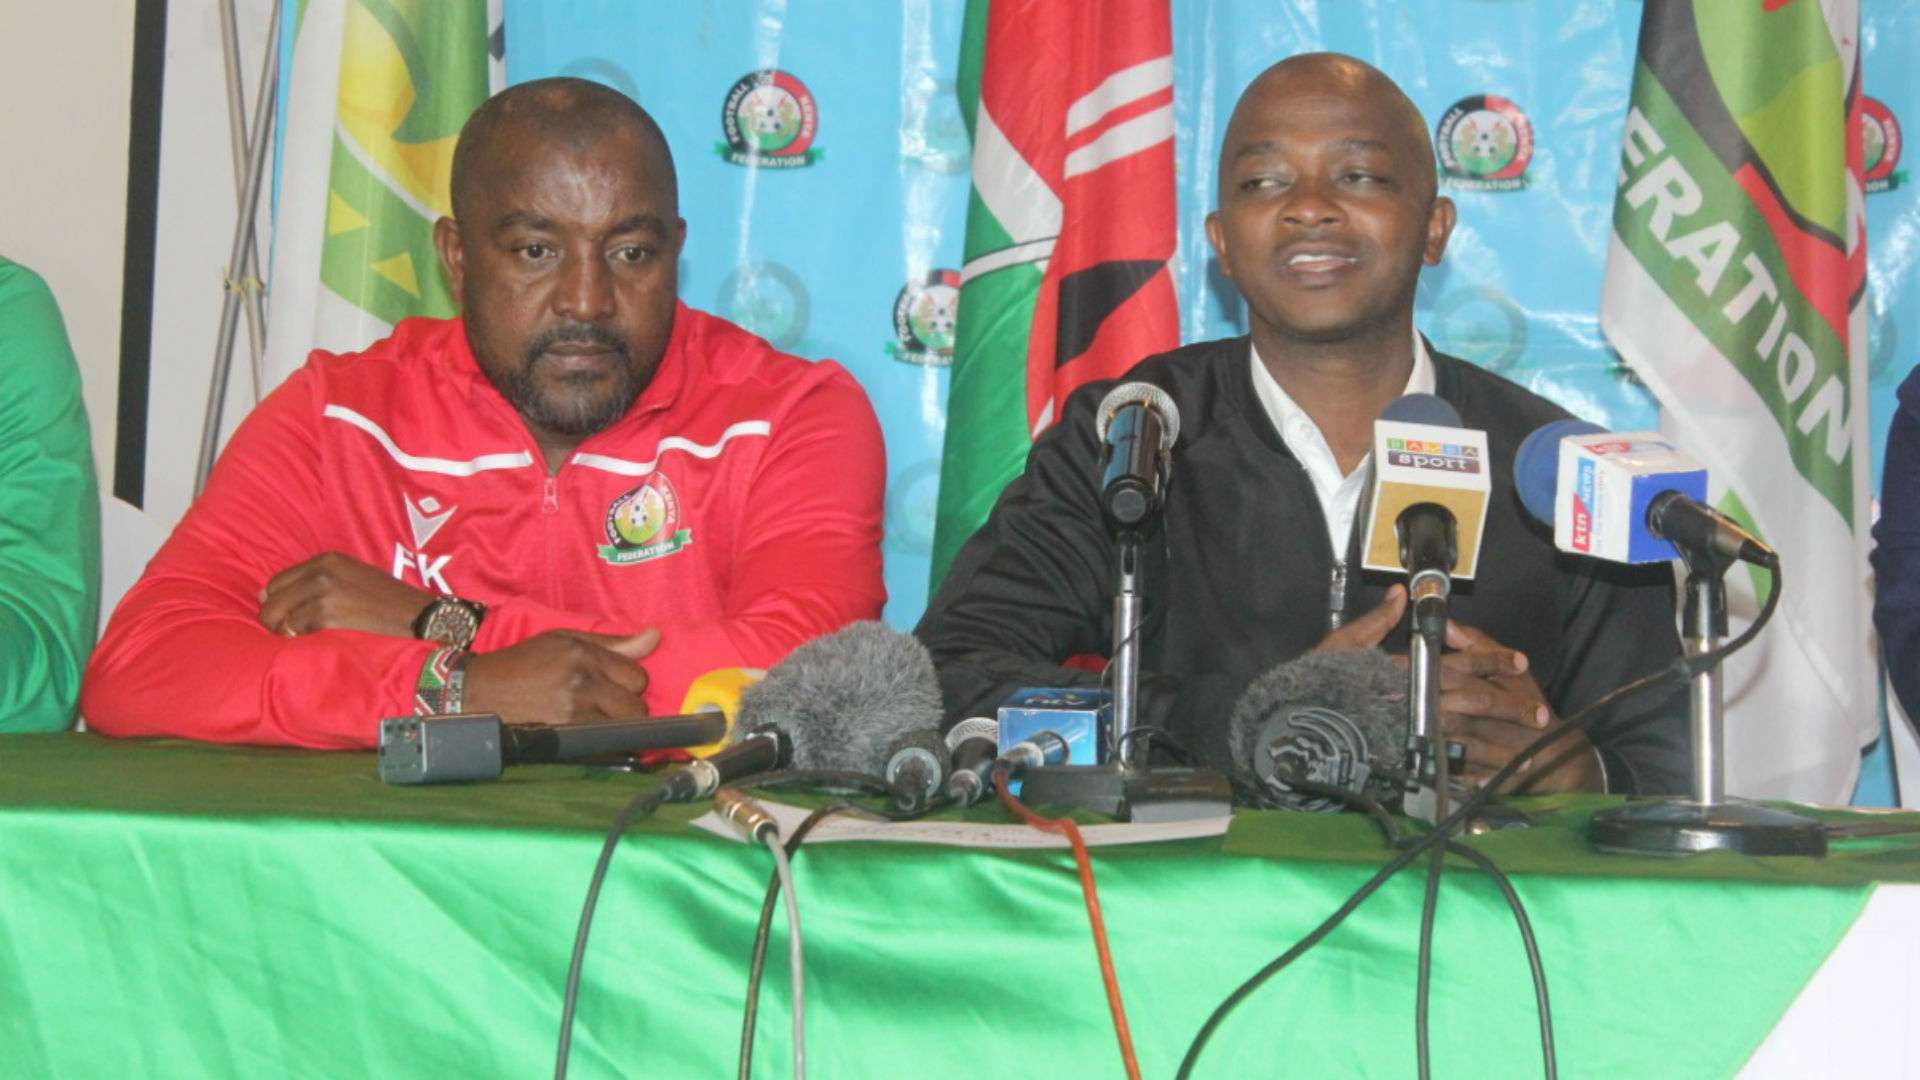 FKF boss Nick Mwendwa and Francis Kimanzi of Harambee Stars and Kenya.